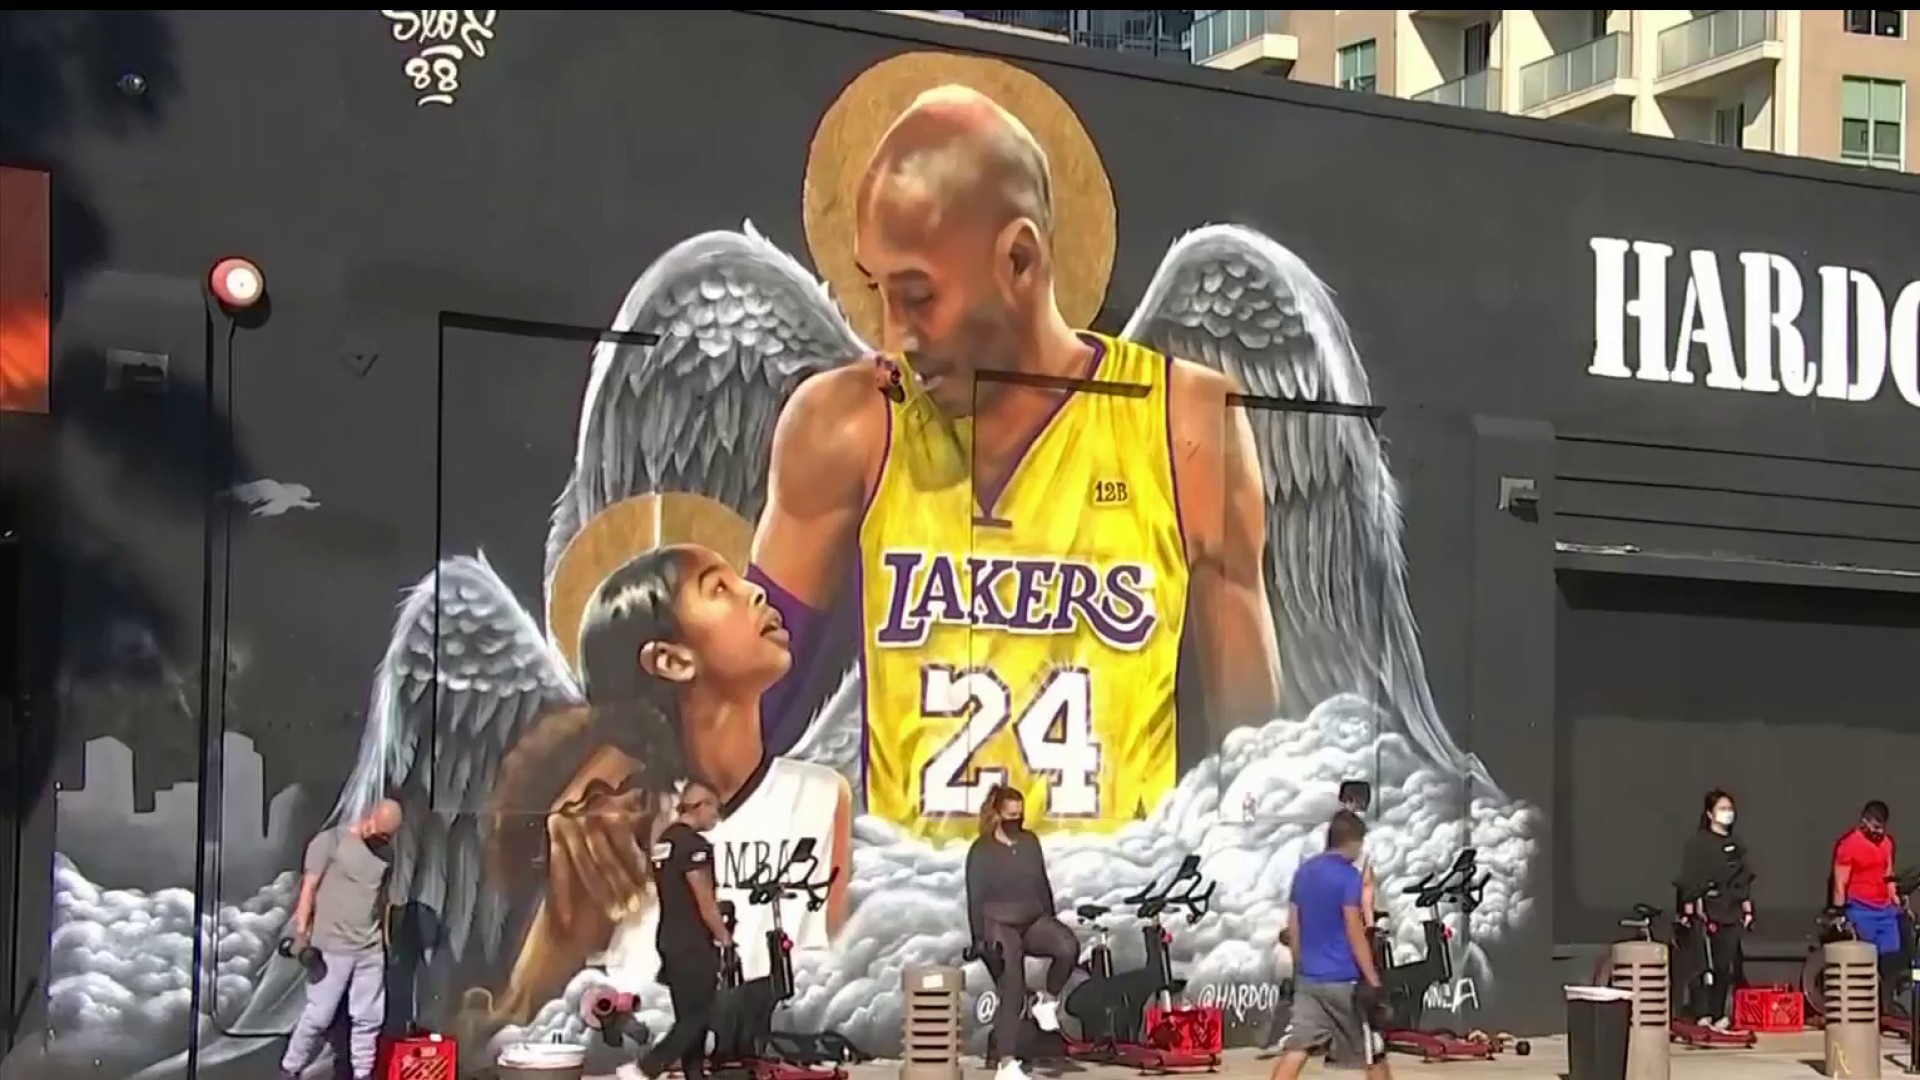 Kobe Bryant MPLS jersey MINT CONDITION size Large Lakers Hall Of Famer Mamba